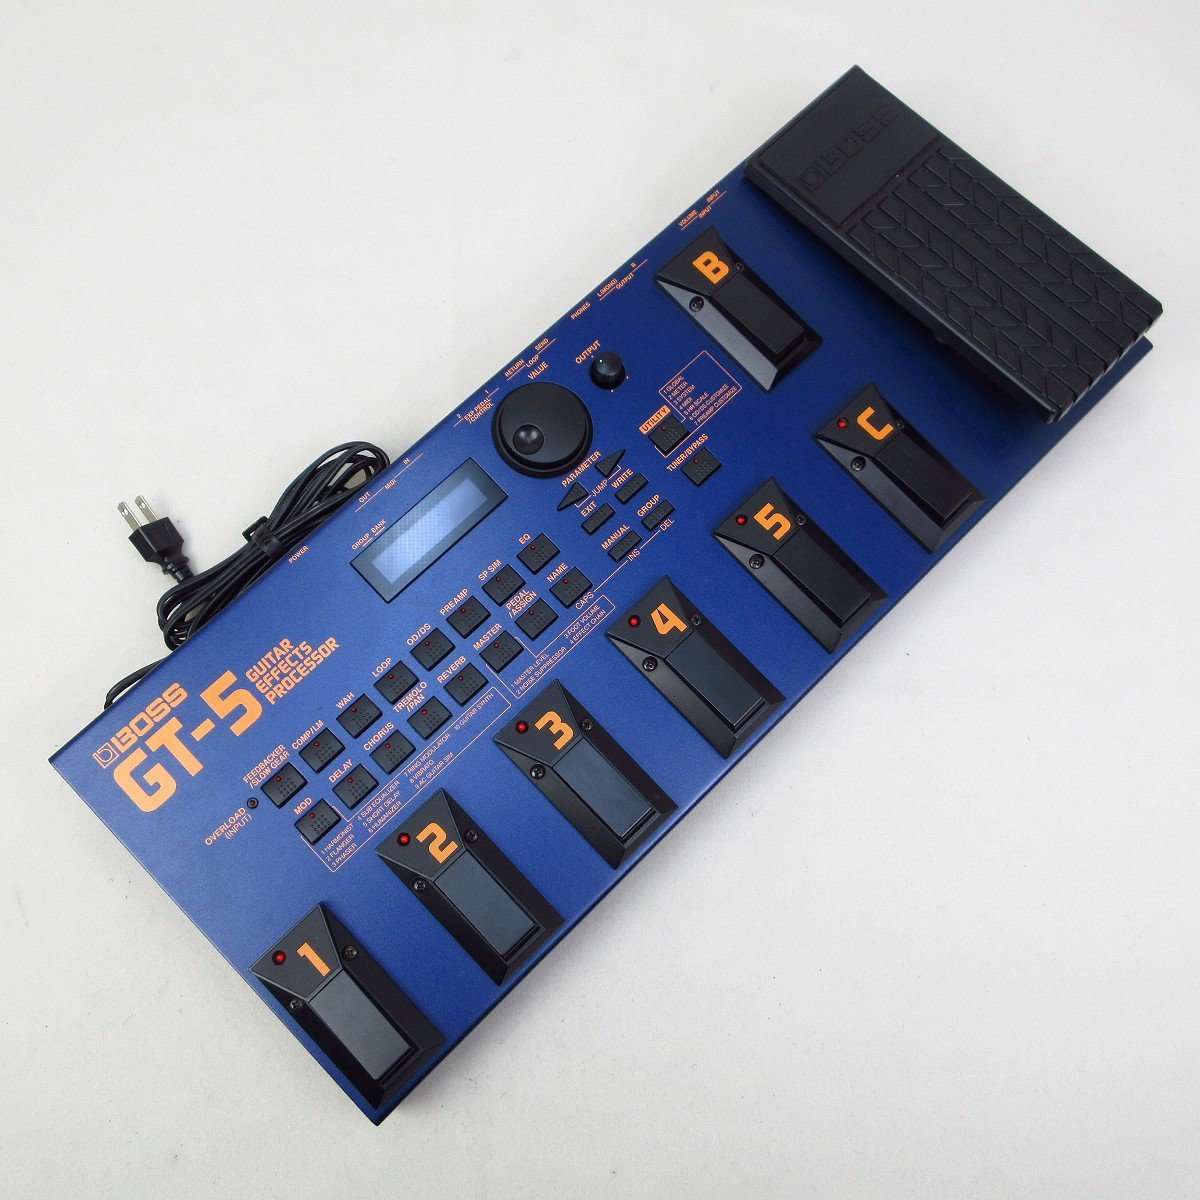 BOSS GT-5 Guitar Effects Processor マルチエフェクター 【横浜店 